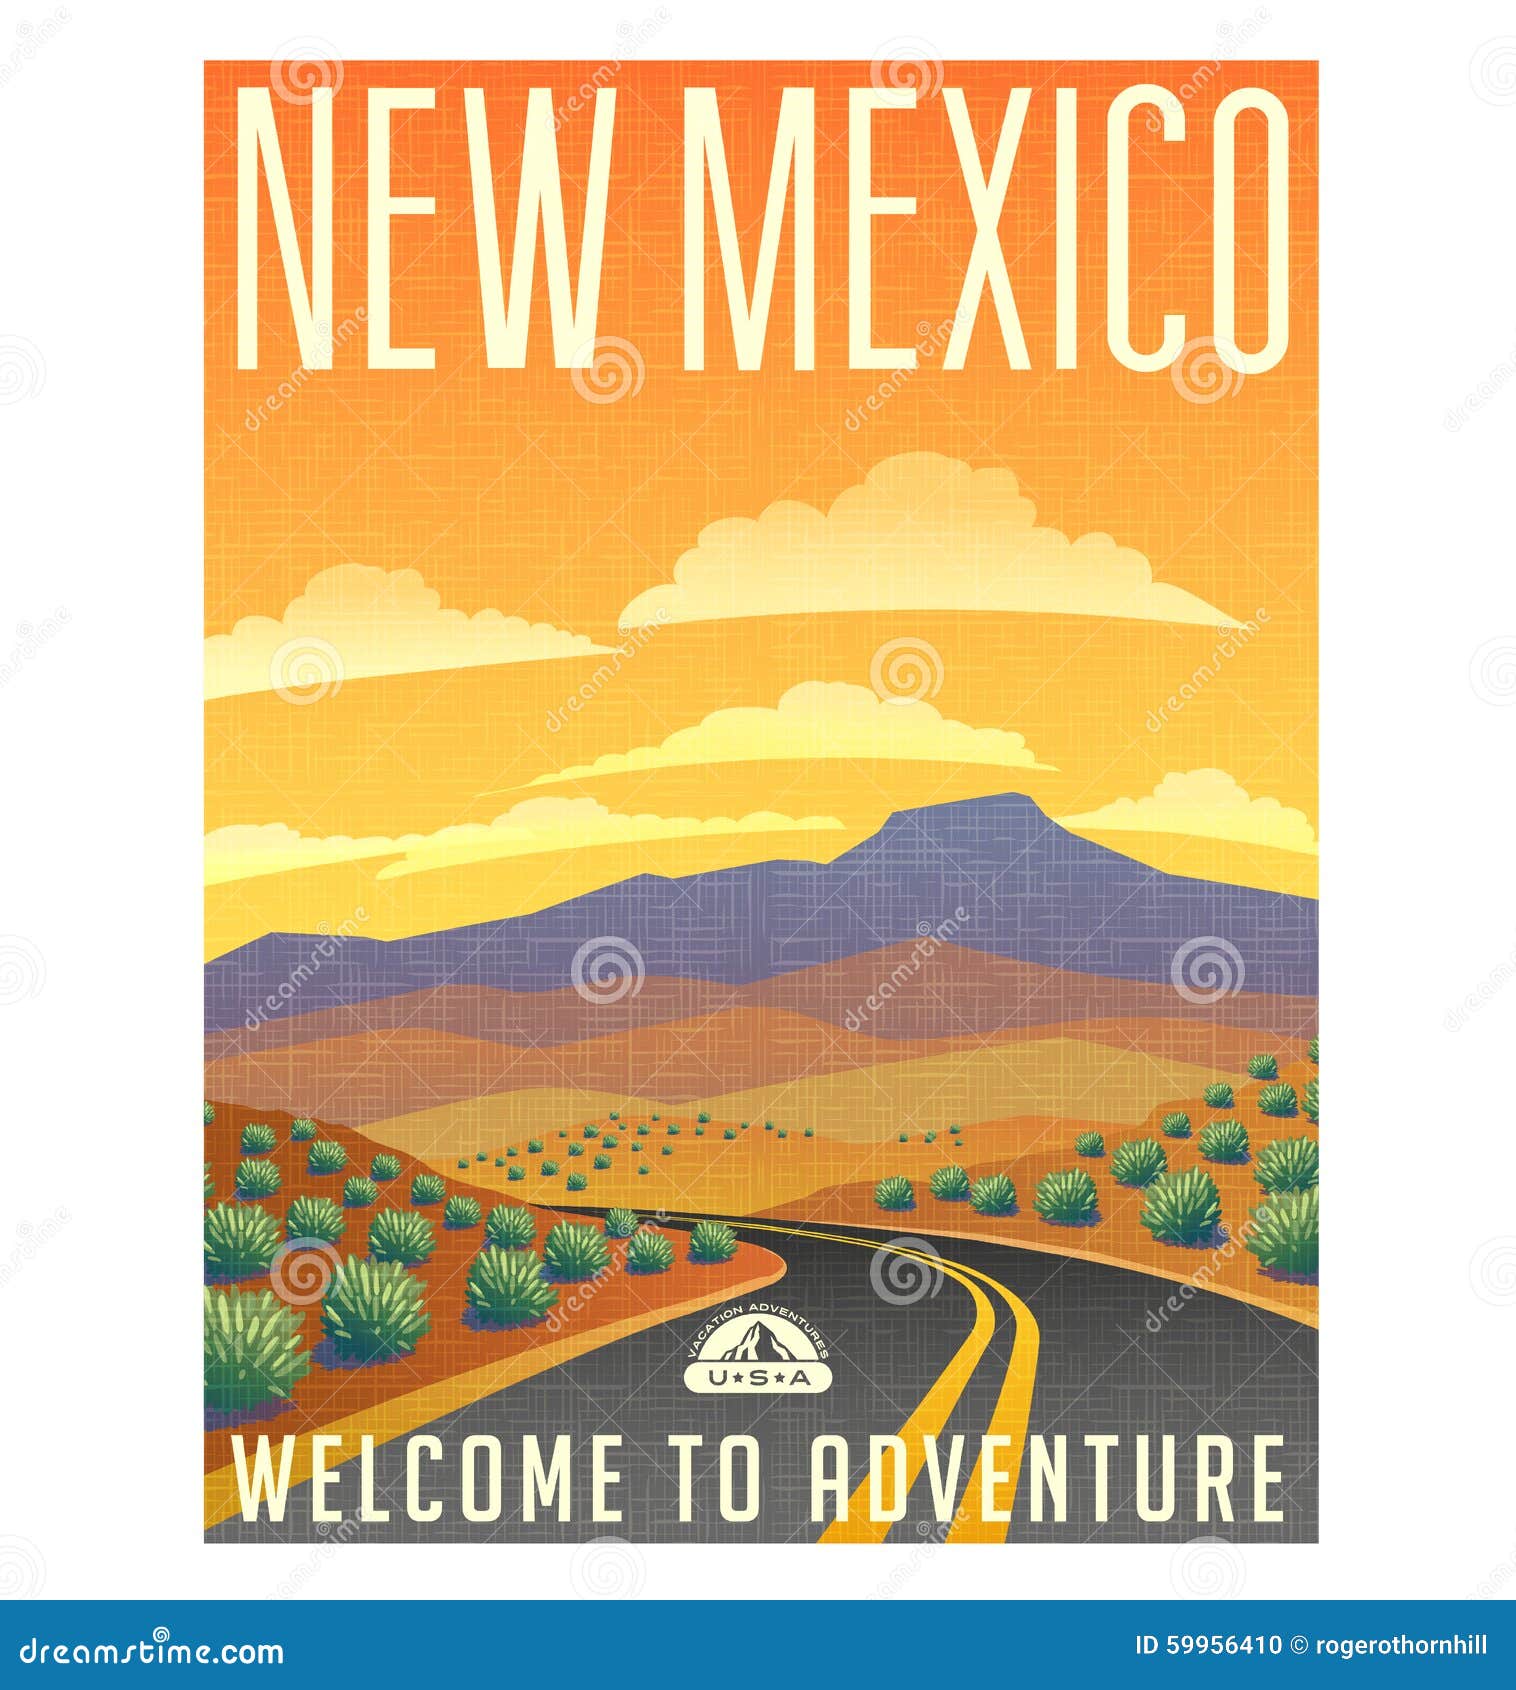 retro style travel poster united states, new mexico desert